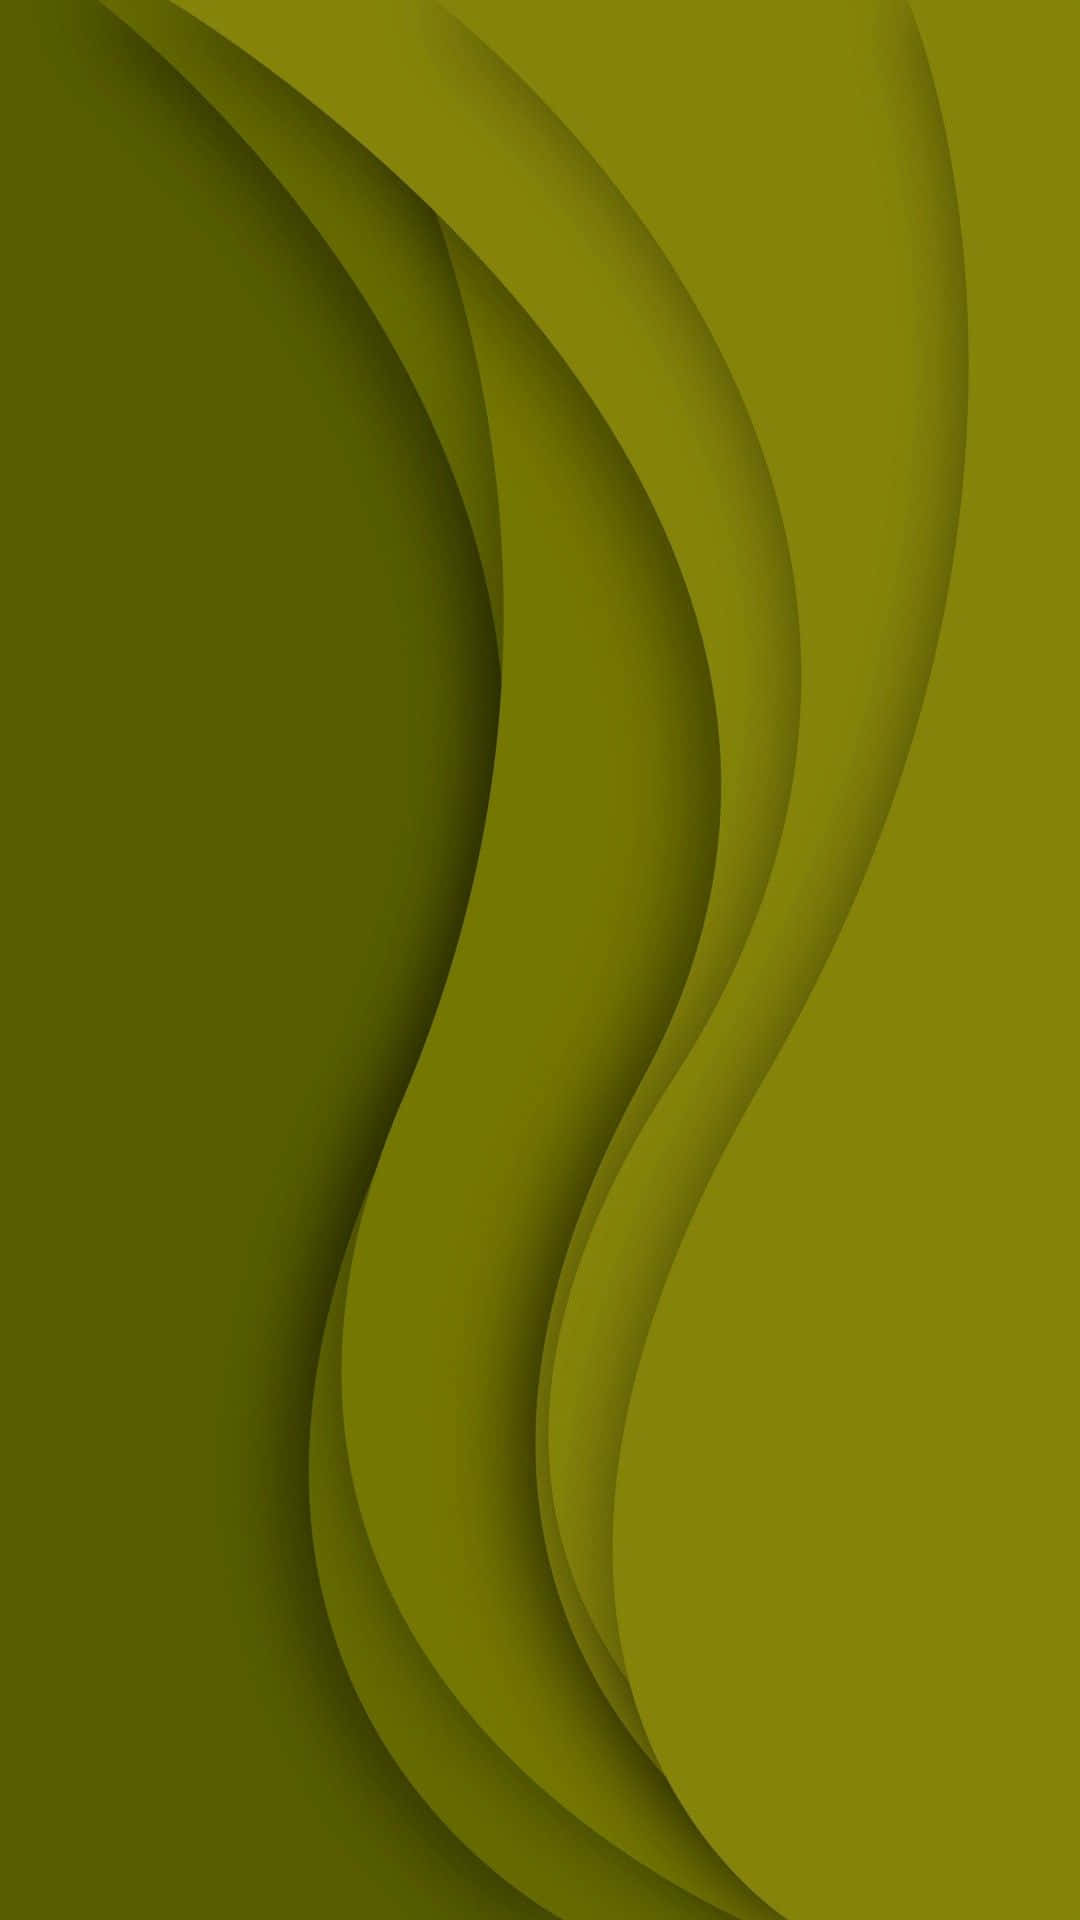 Fåden Senaste Apple Iphone 12 Pro I Olivgrön Som Bakgrundsbild På Din Dator Eller Mobiltelefon. Wallpaper